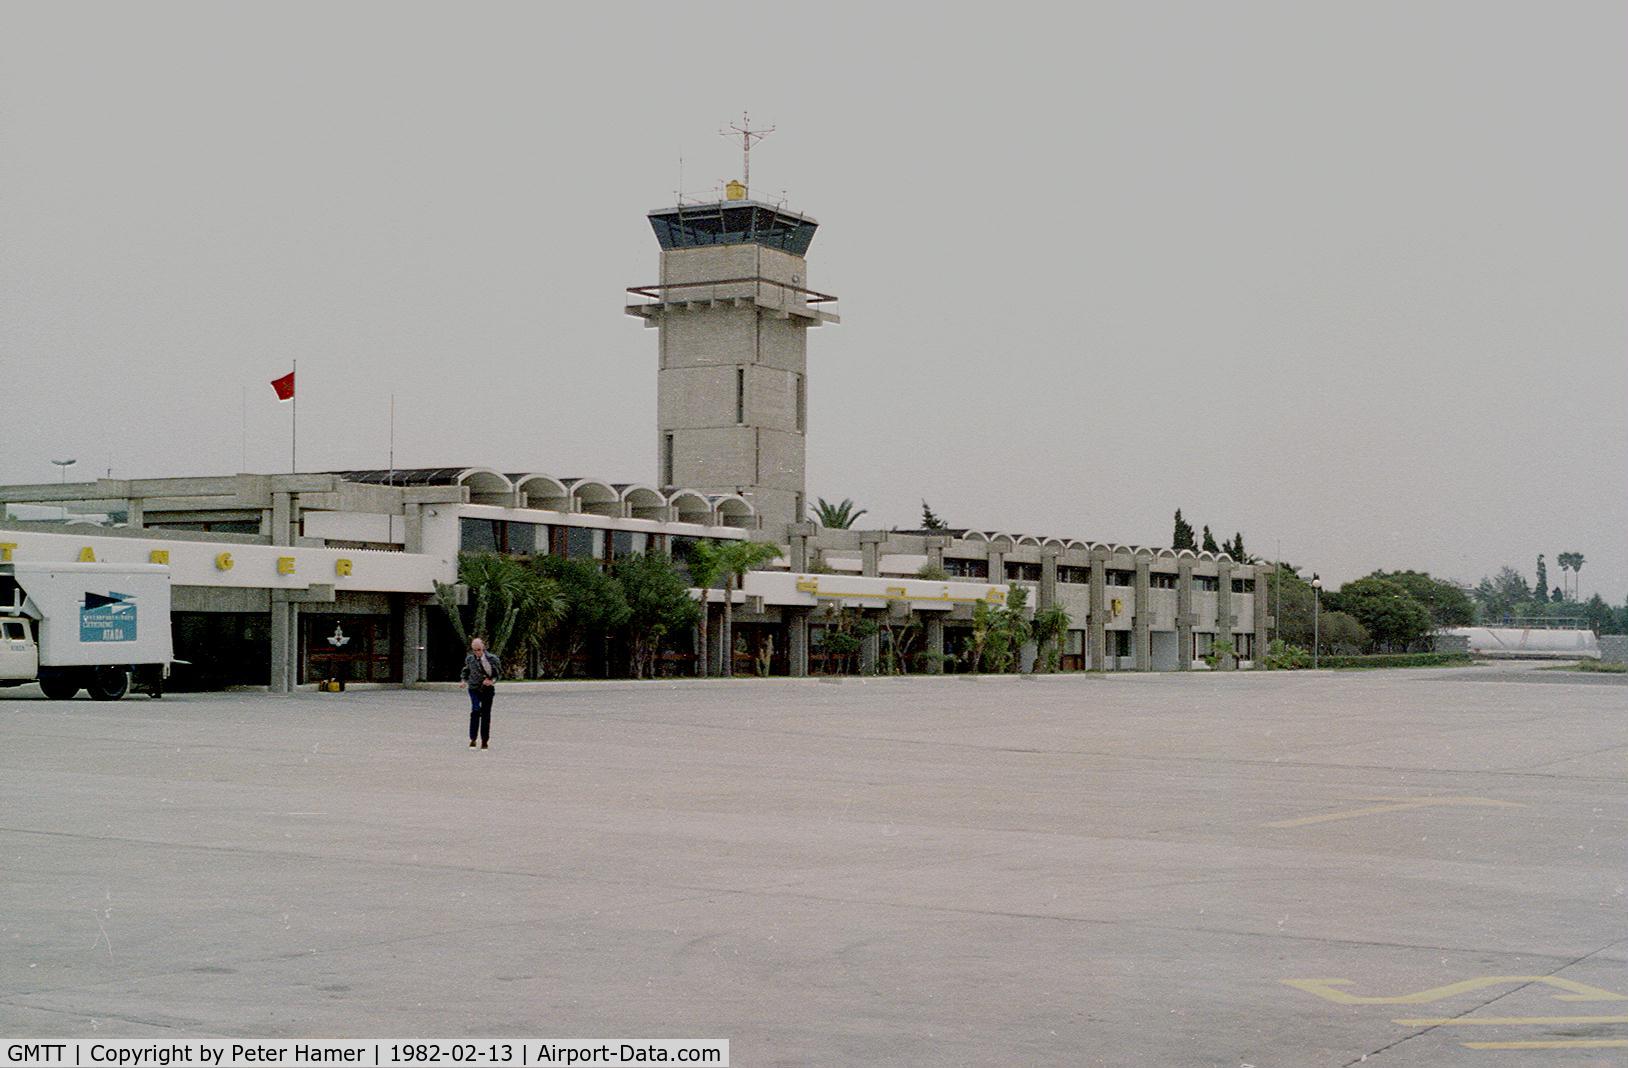 Ibn Batouta International Airport (Boukhaif/Tanger Airport), Tanger Morocco (GMTT) - Tanger